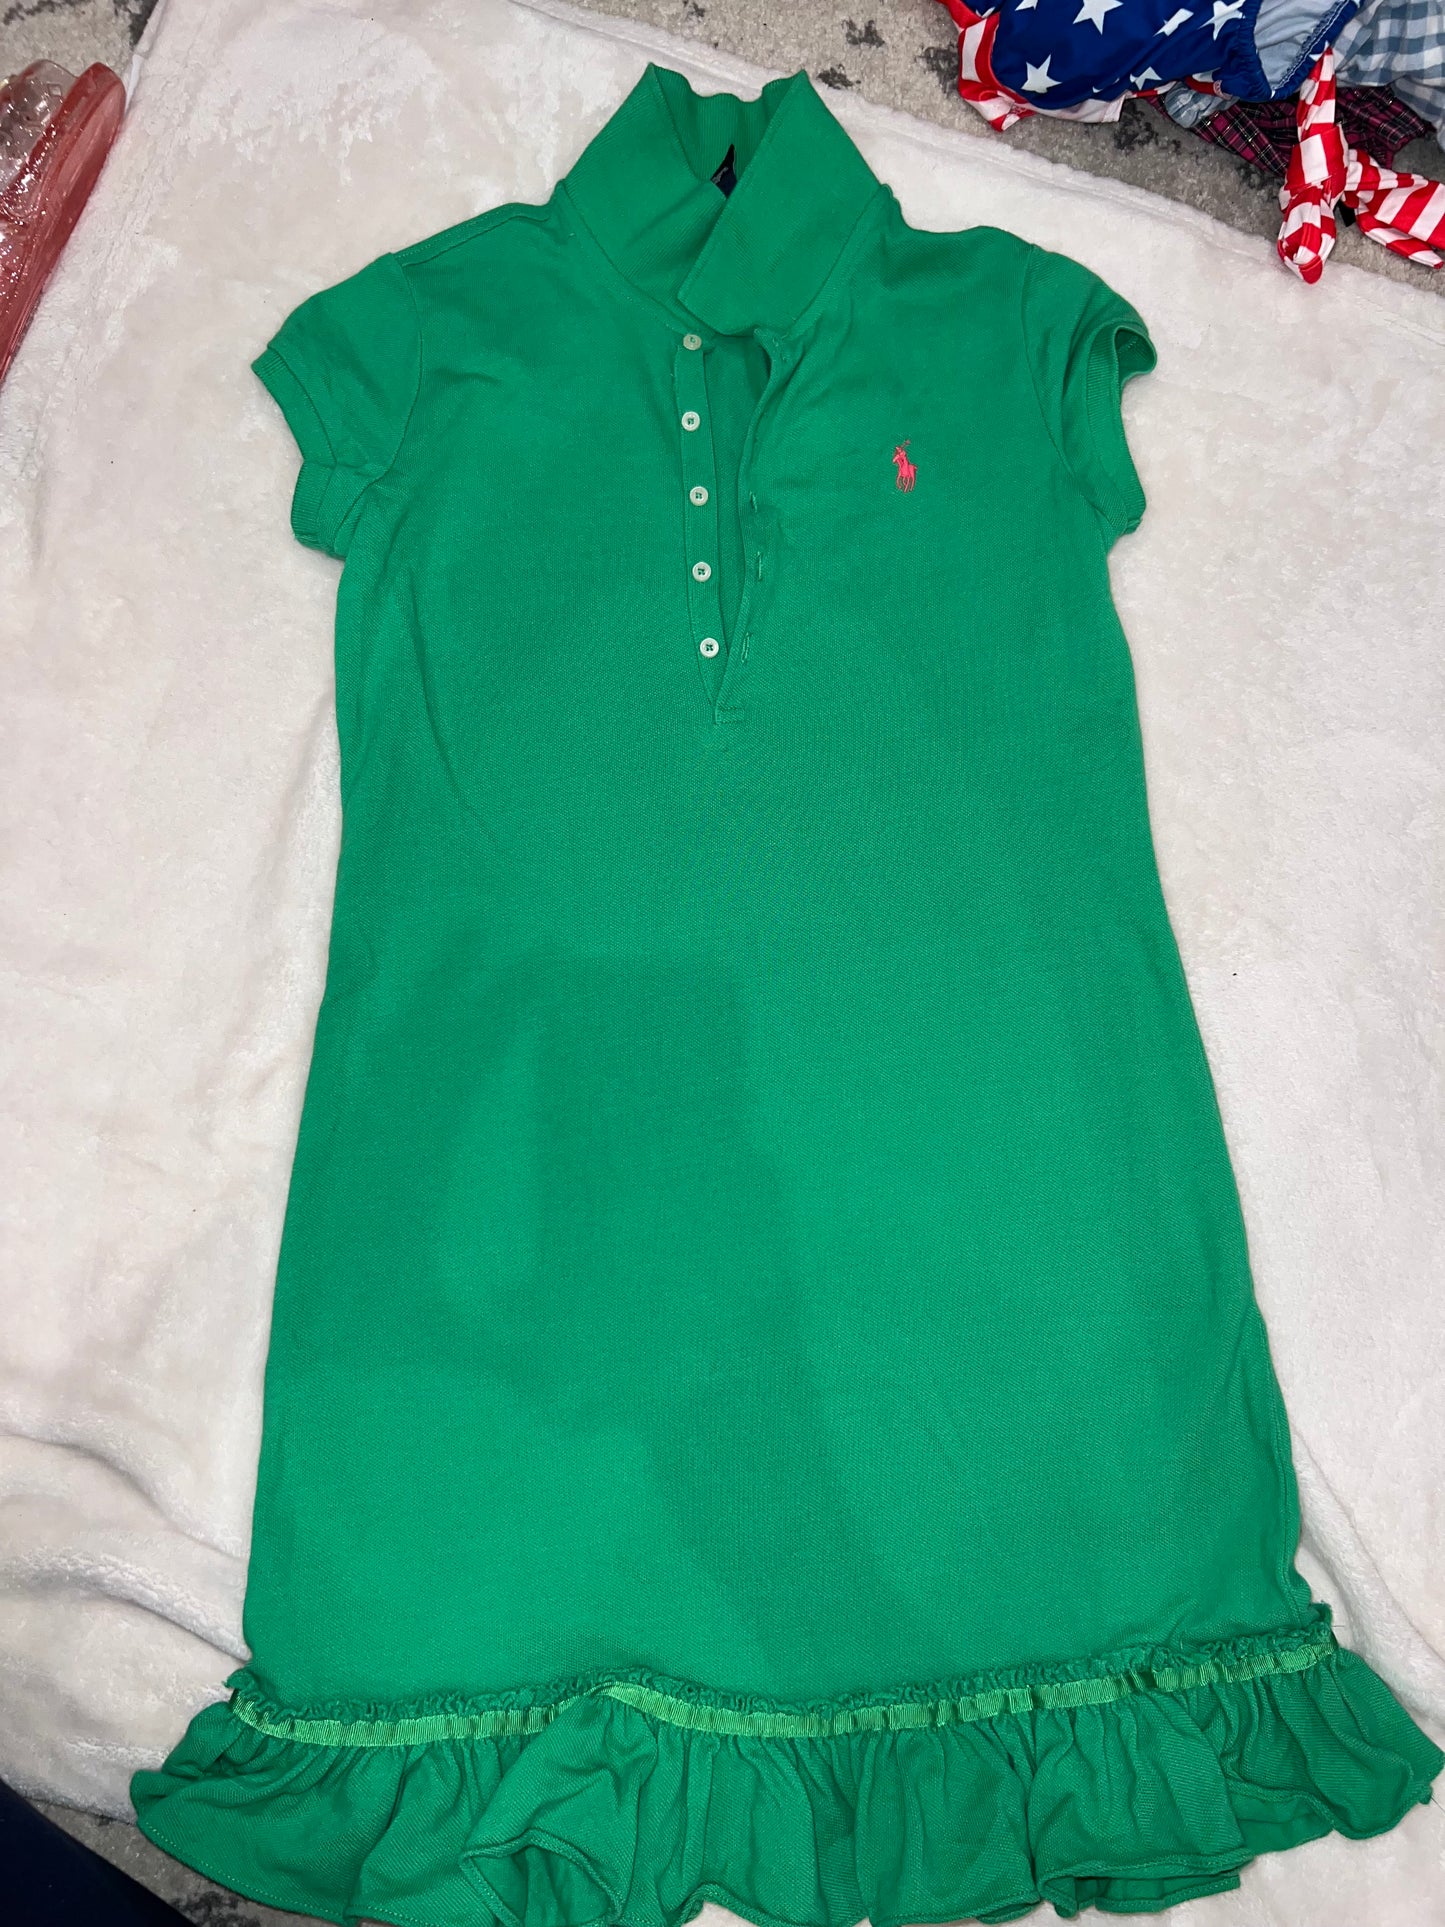 Girls Large (12/14) Polo Dress, masters golf, st patricks day